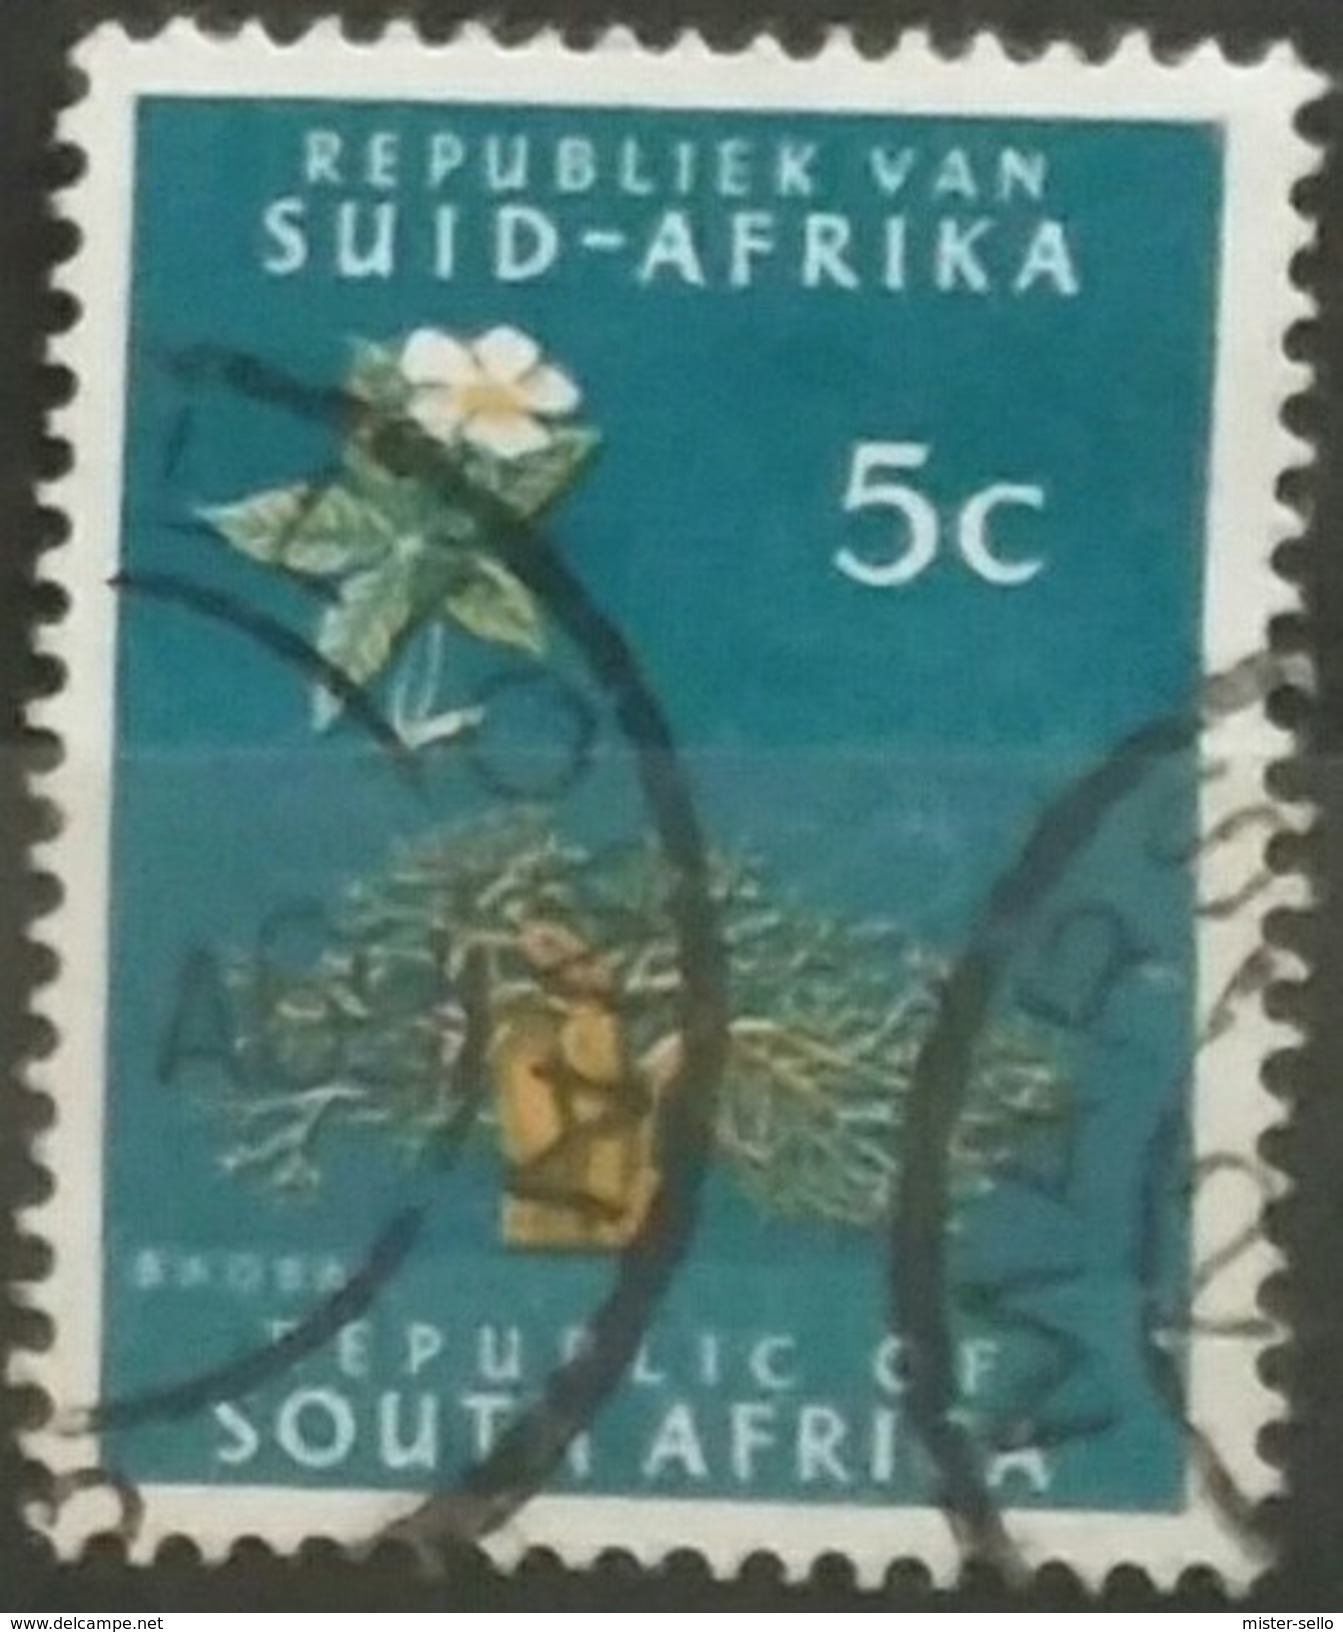 SUDAFRICA - AFRICA DEL SUR 1961 Definitive Issue. USADO - USED. - Usados